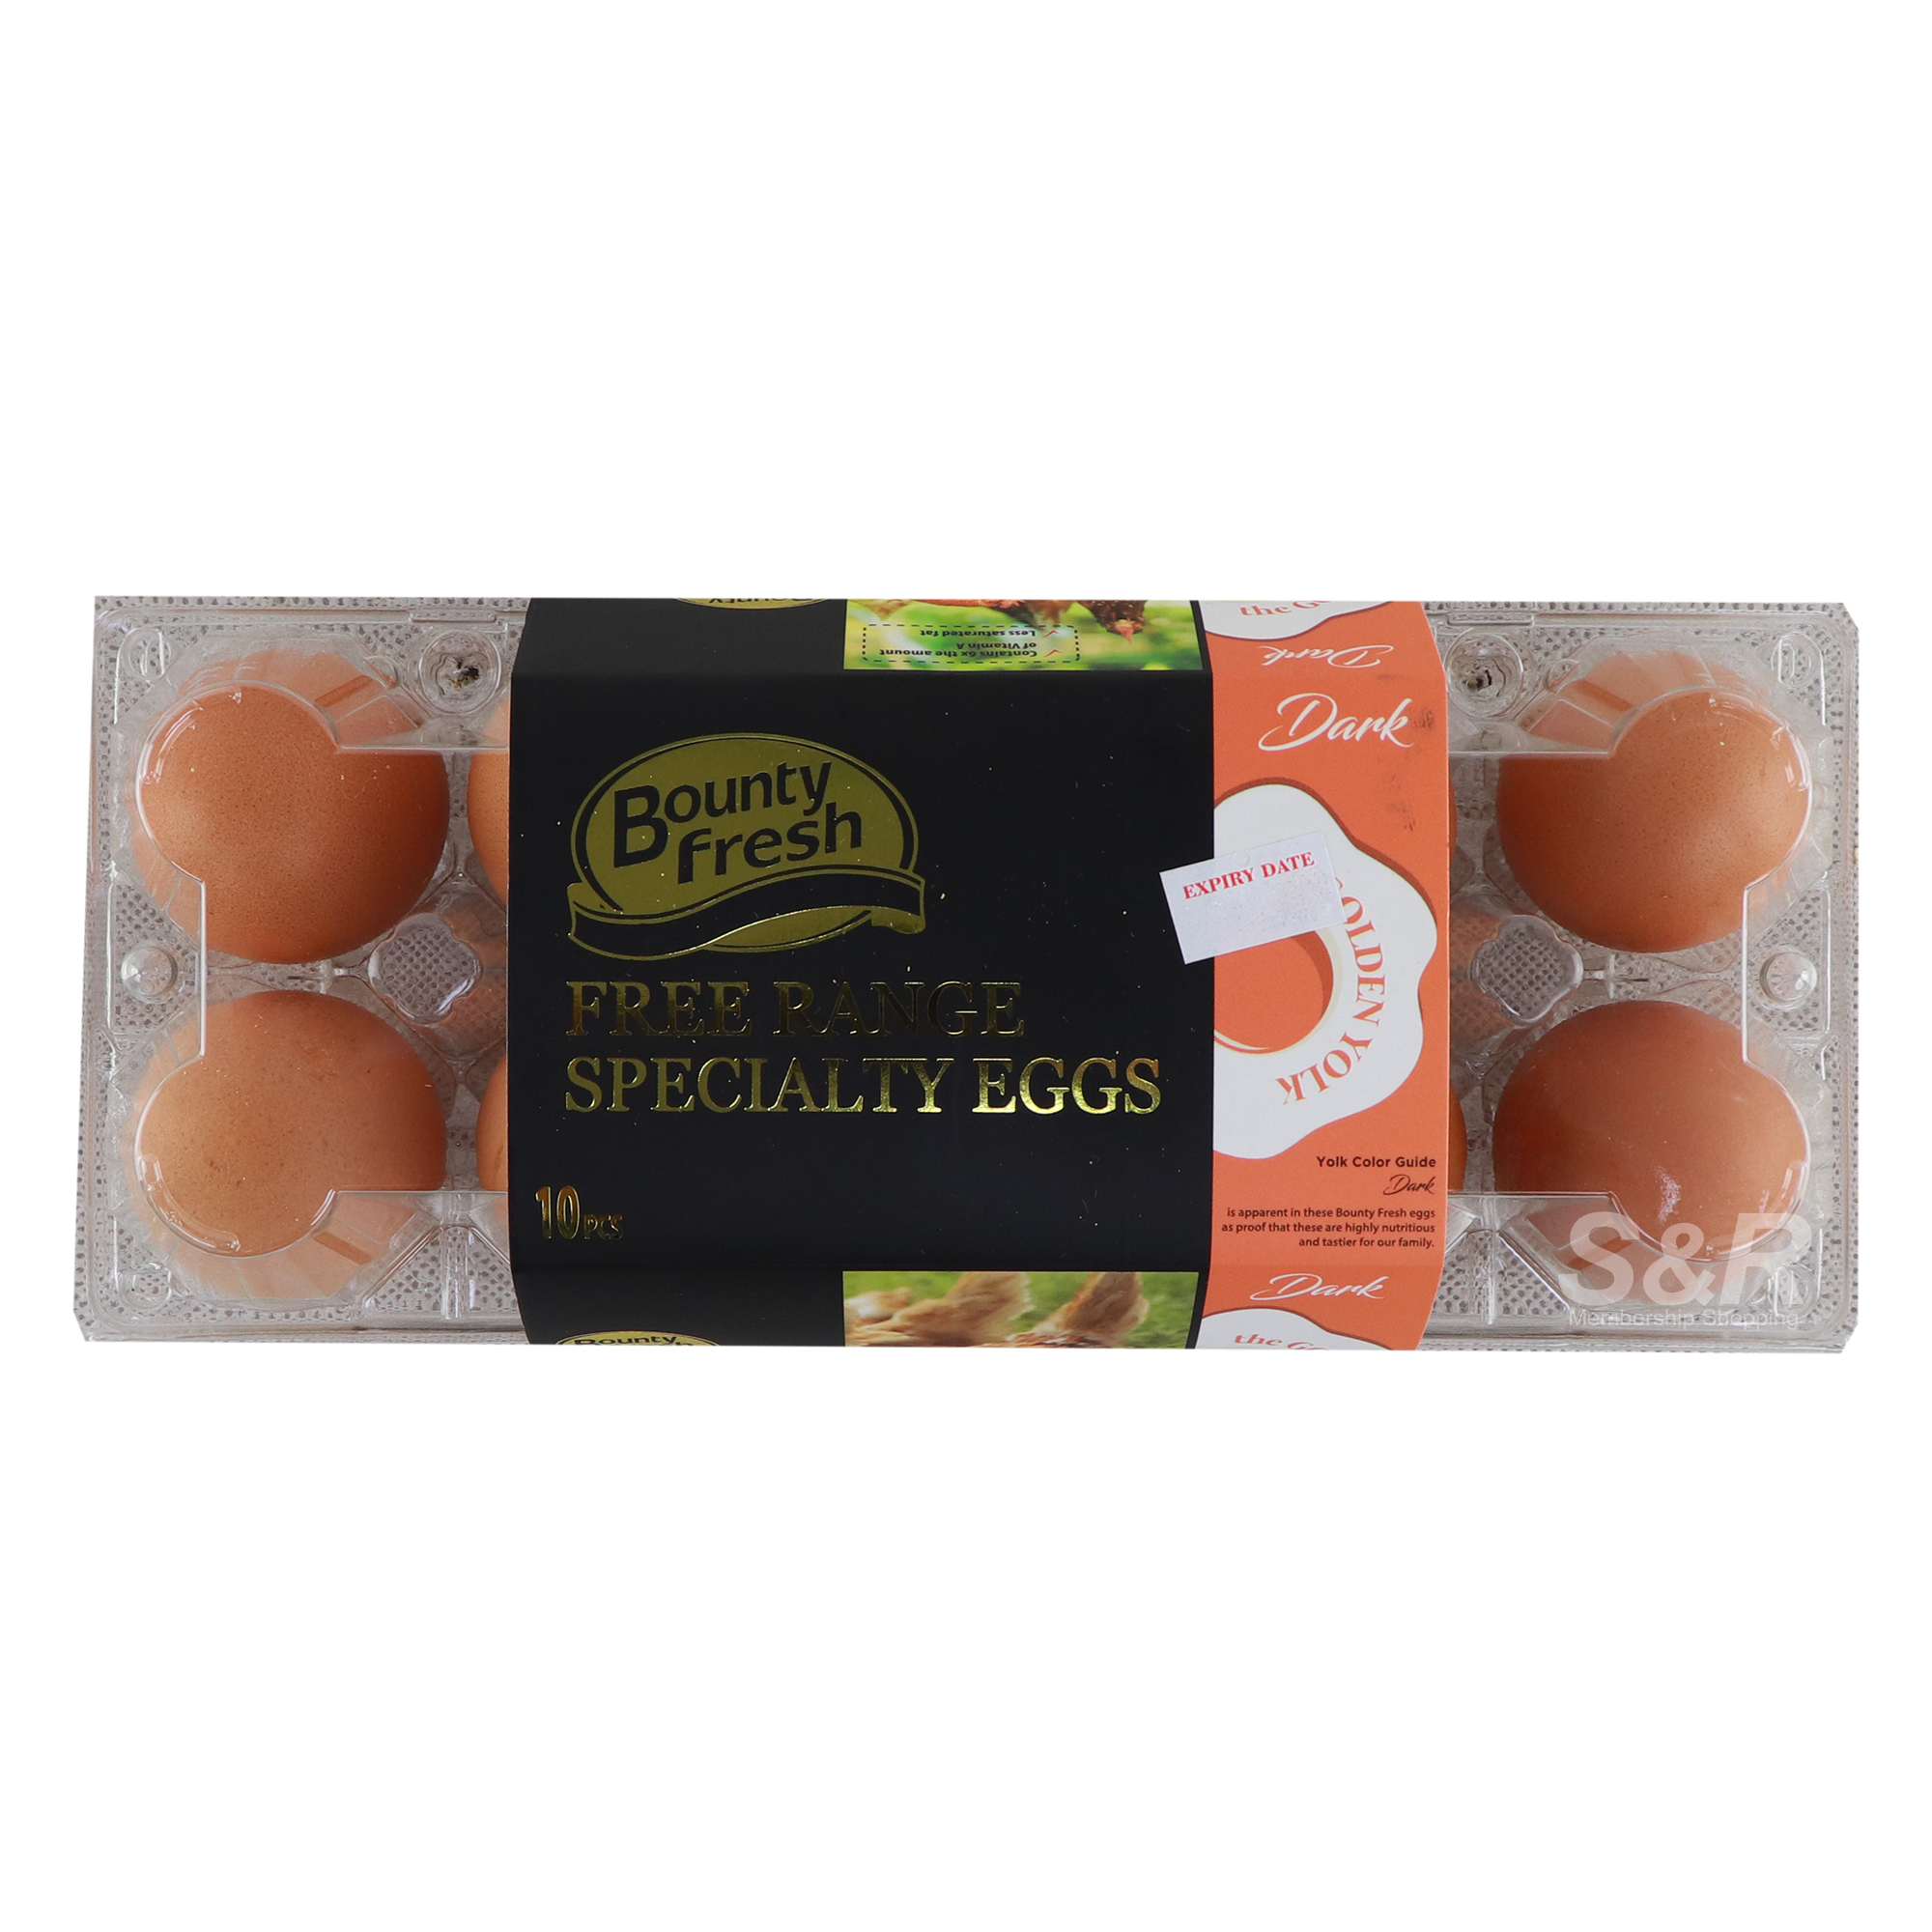 Bounty Fresh Free Range Specialty Brown Eggs 10pcs